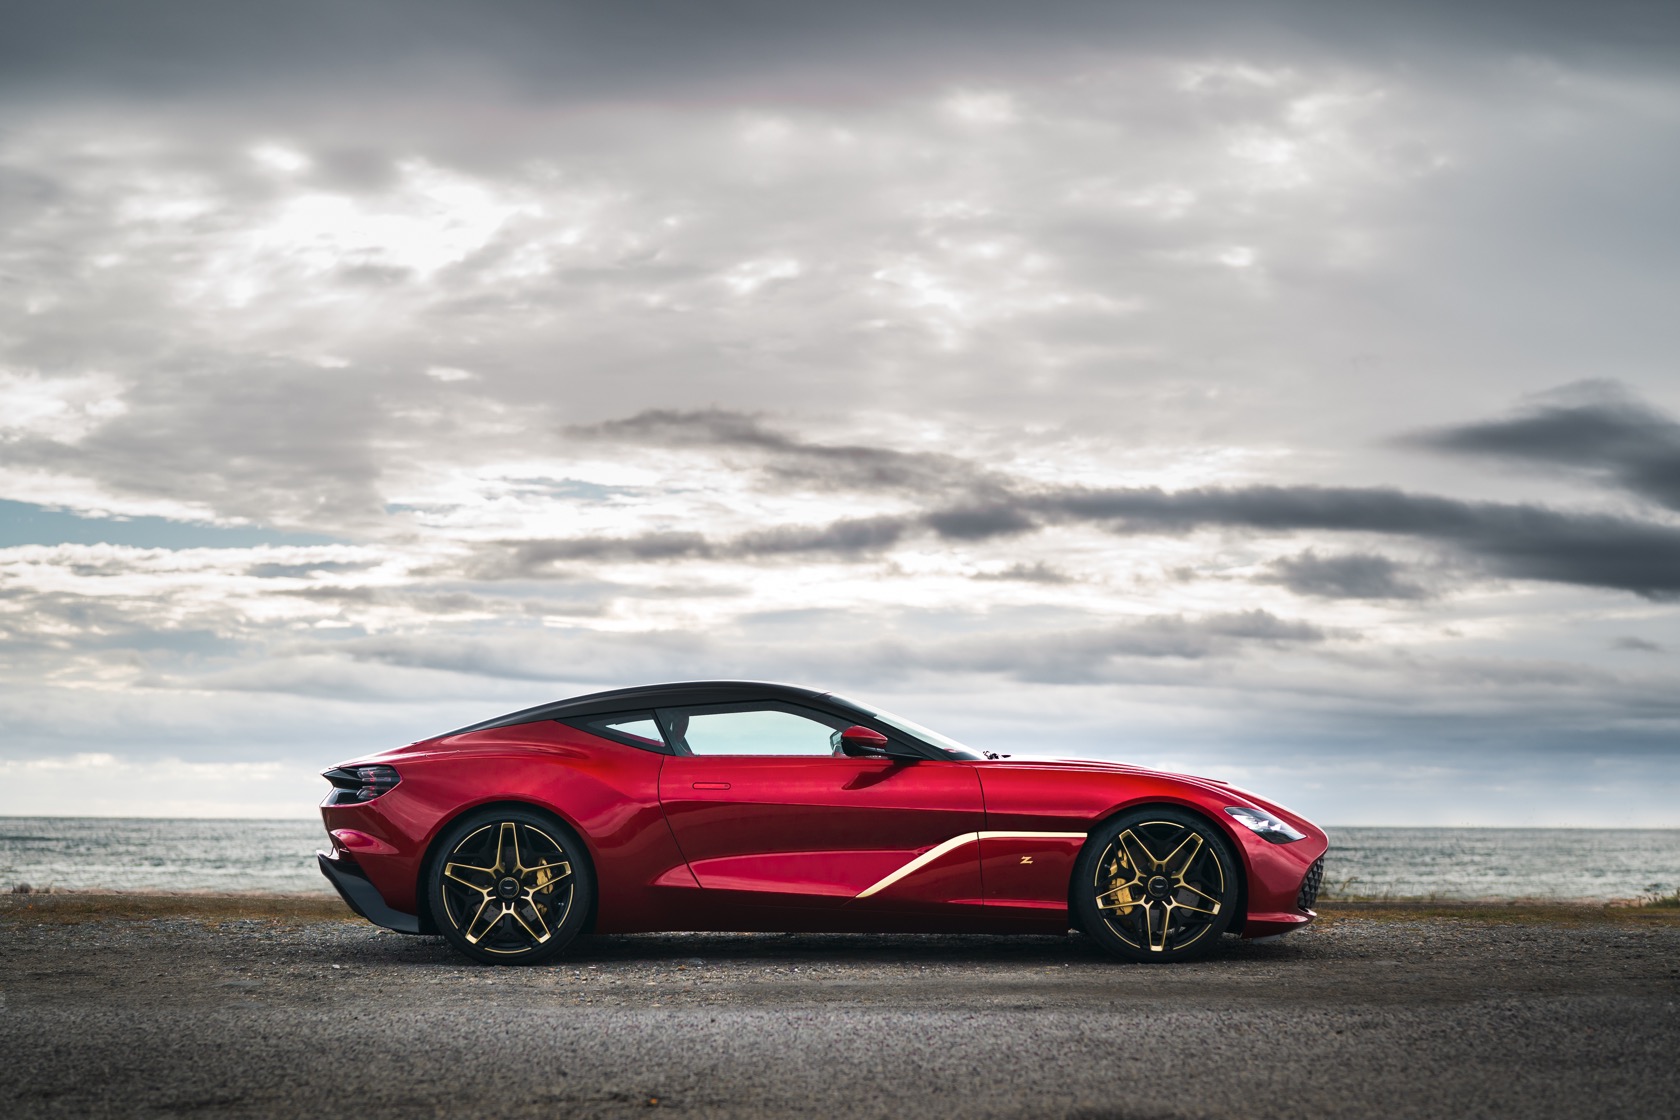 The Aston Martin DBS GT Zagato's striking looks rely on bleeding-edge